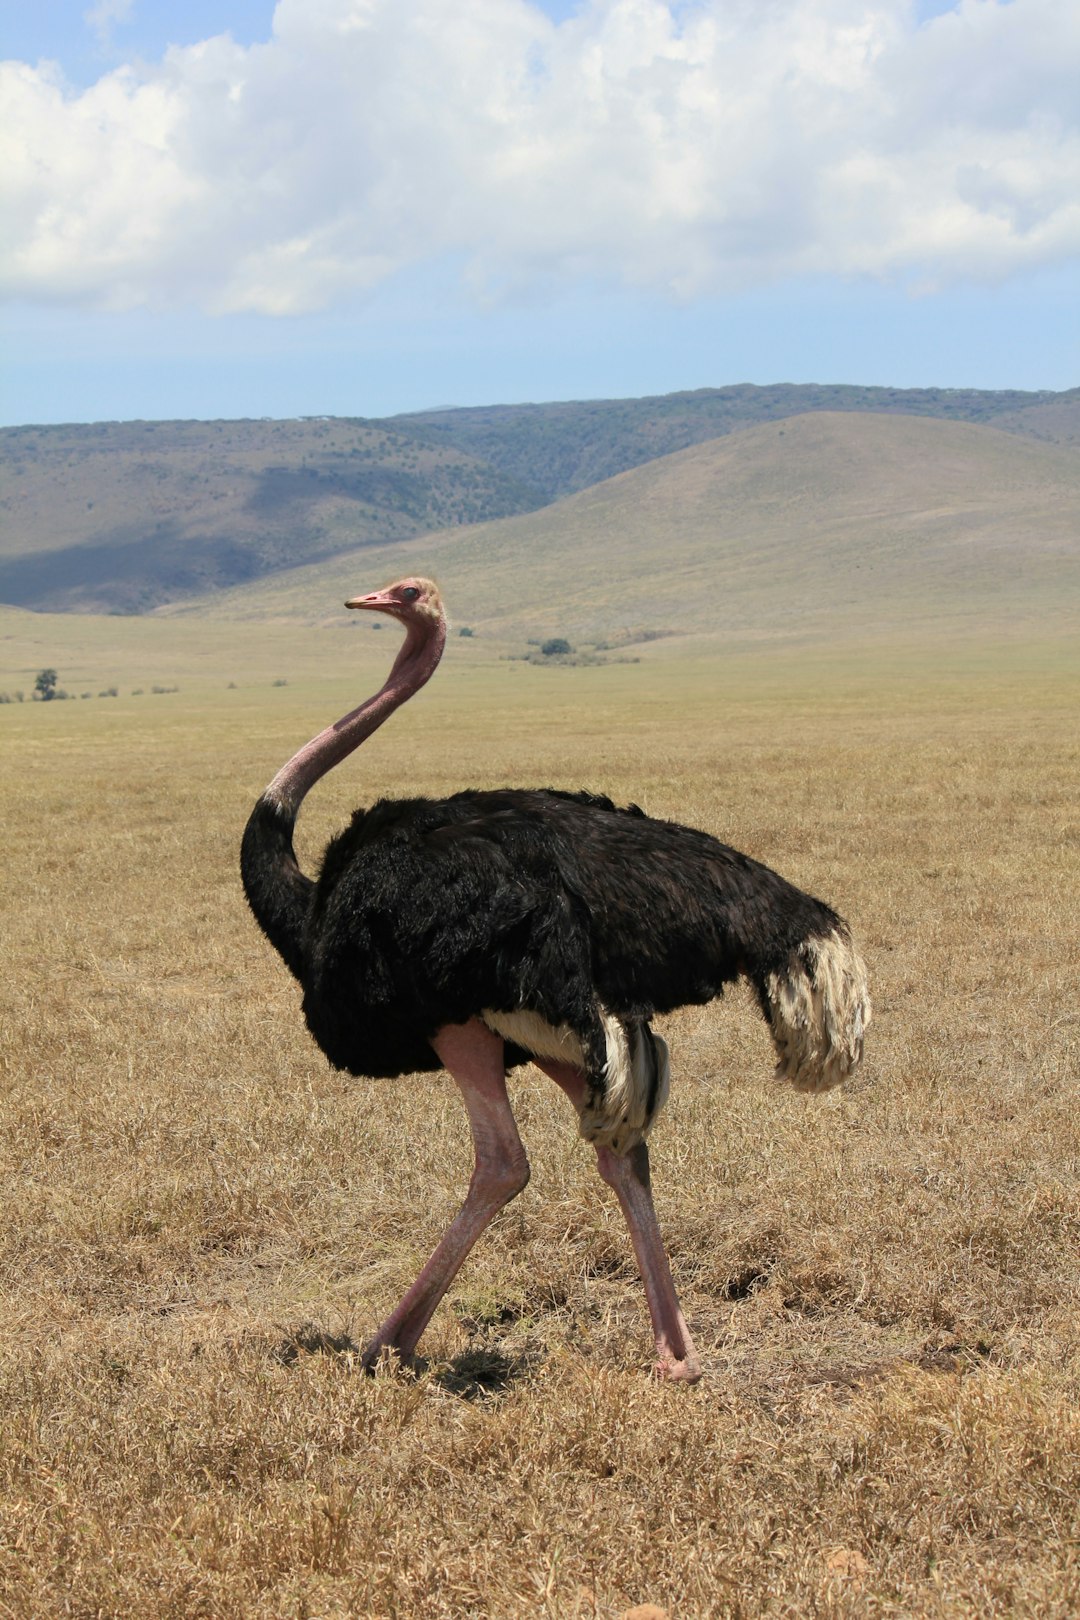  black ostrich on grassy field ostrich